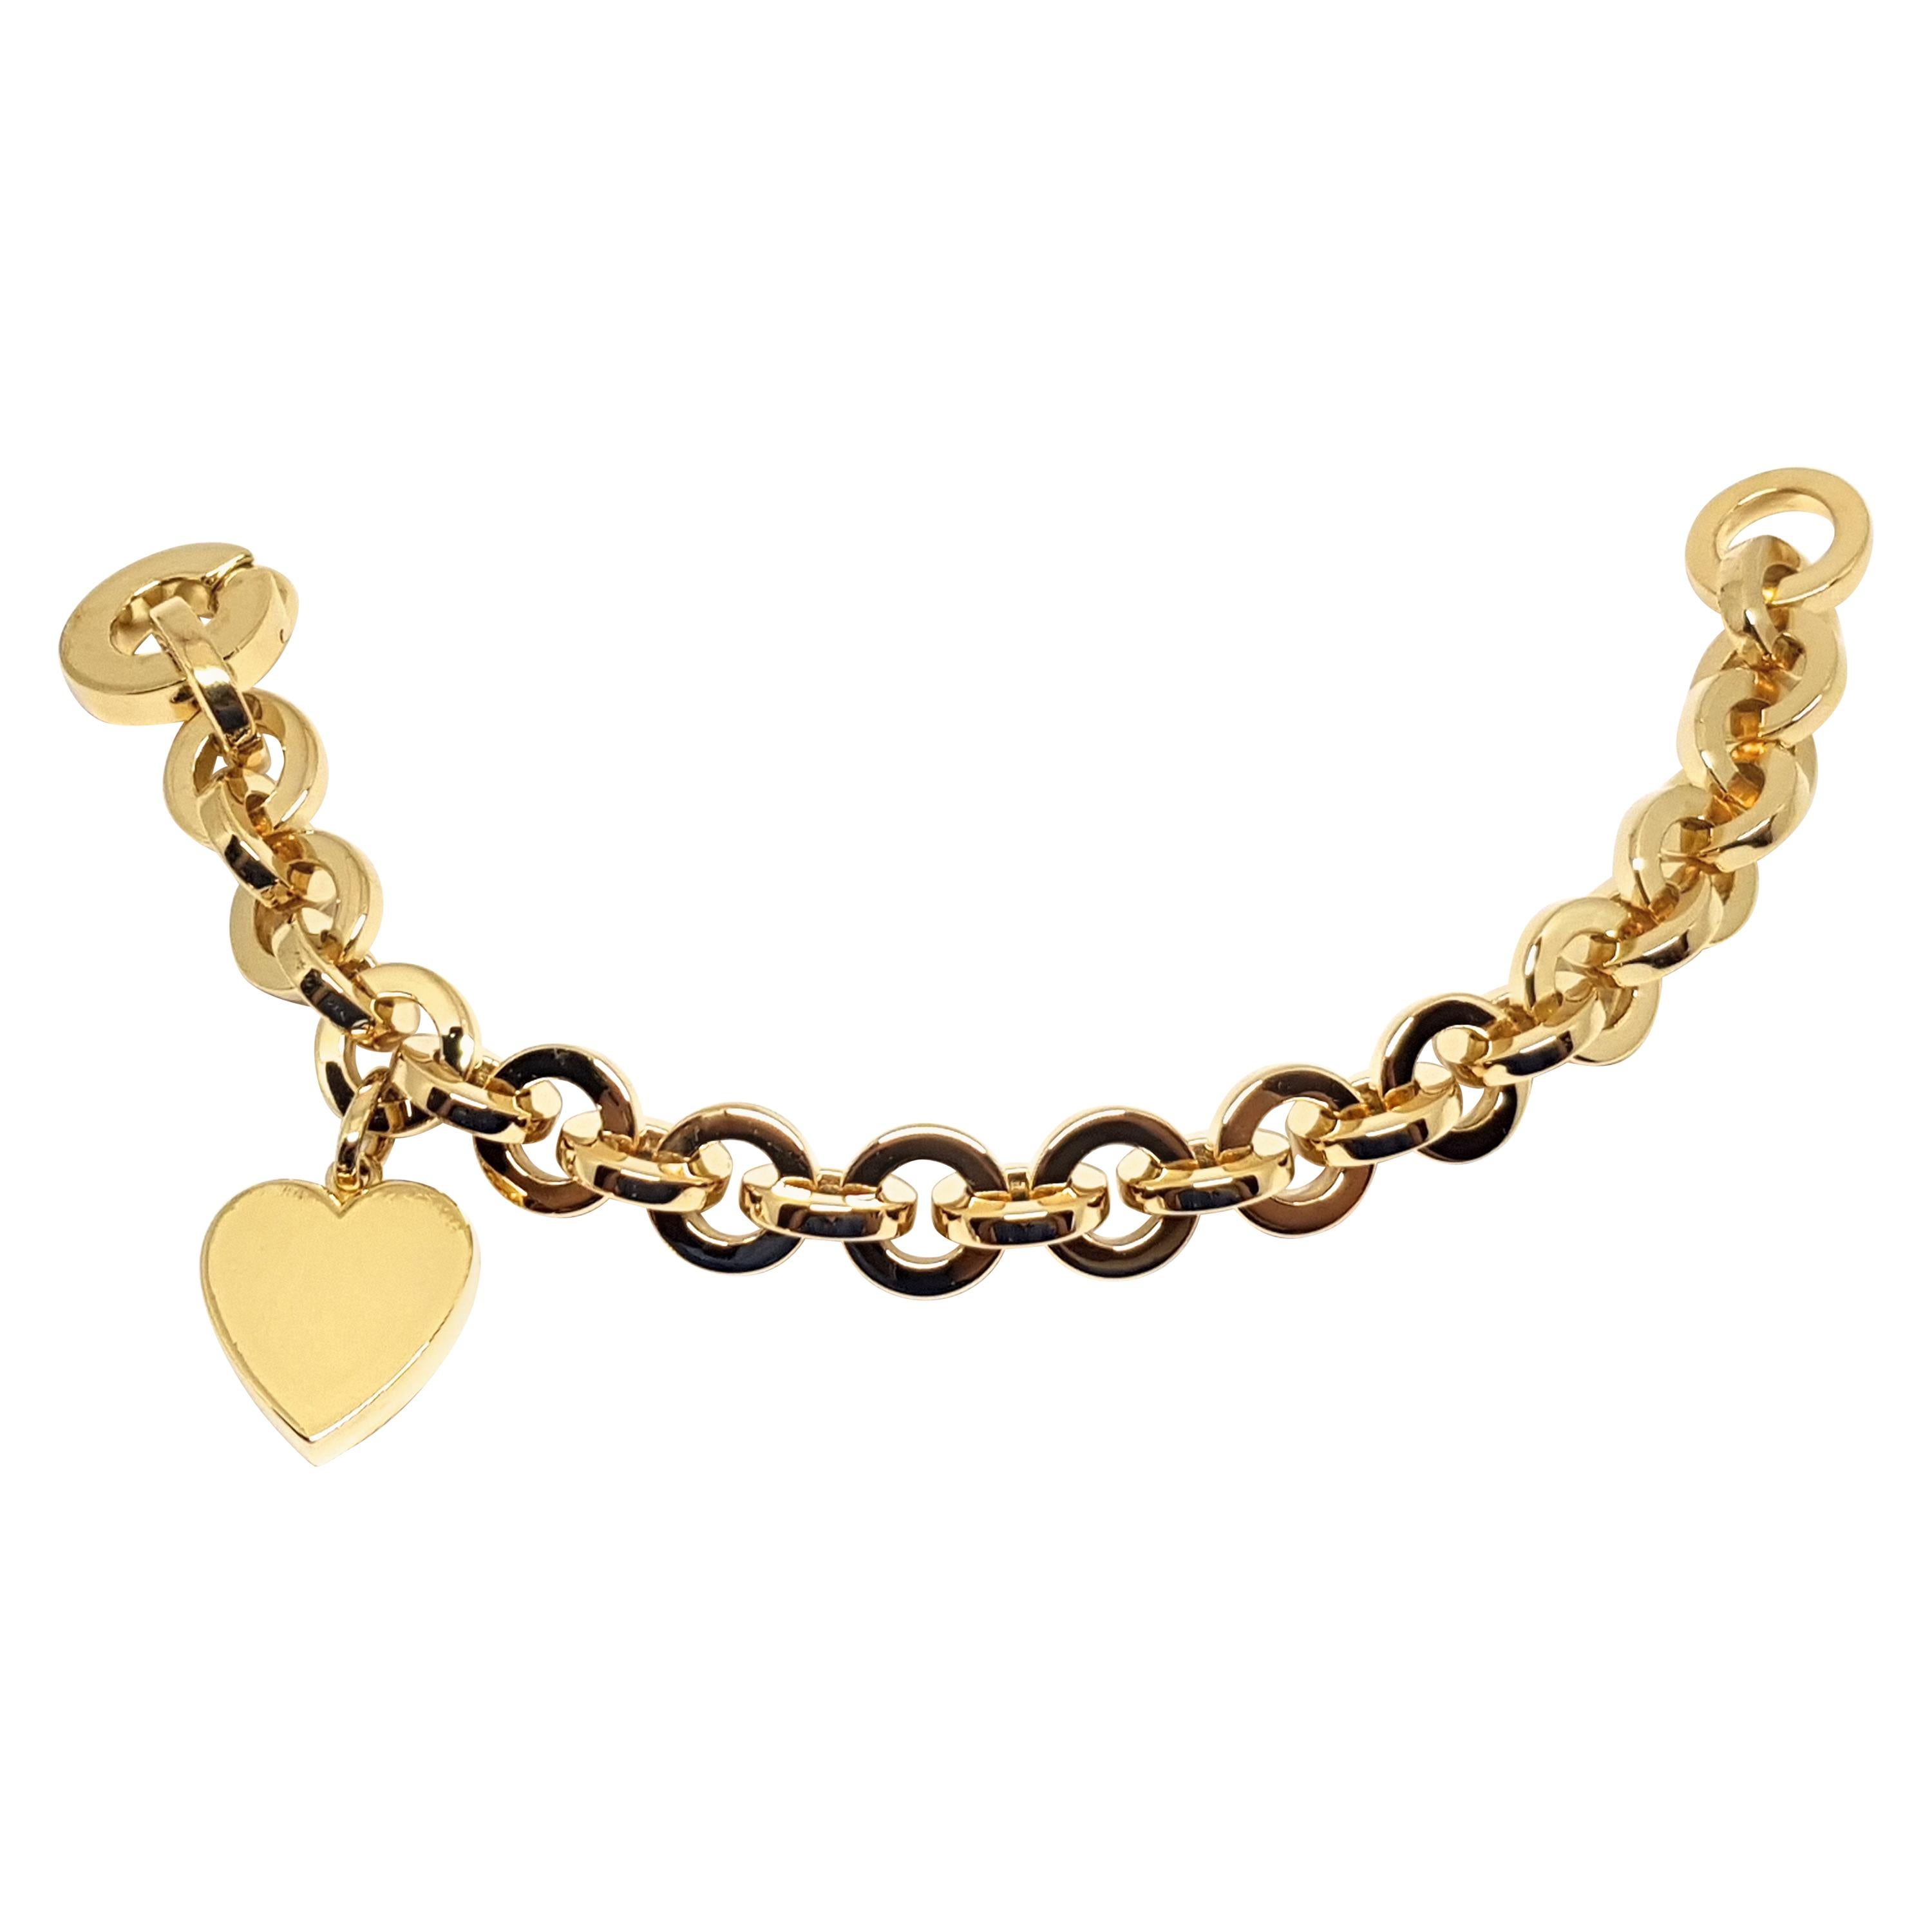 Pomellato Original Signed Ladies 18 Karat Yellow Gold Chain Charm Bracelet